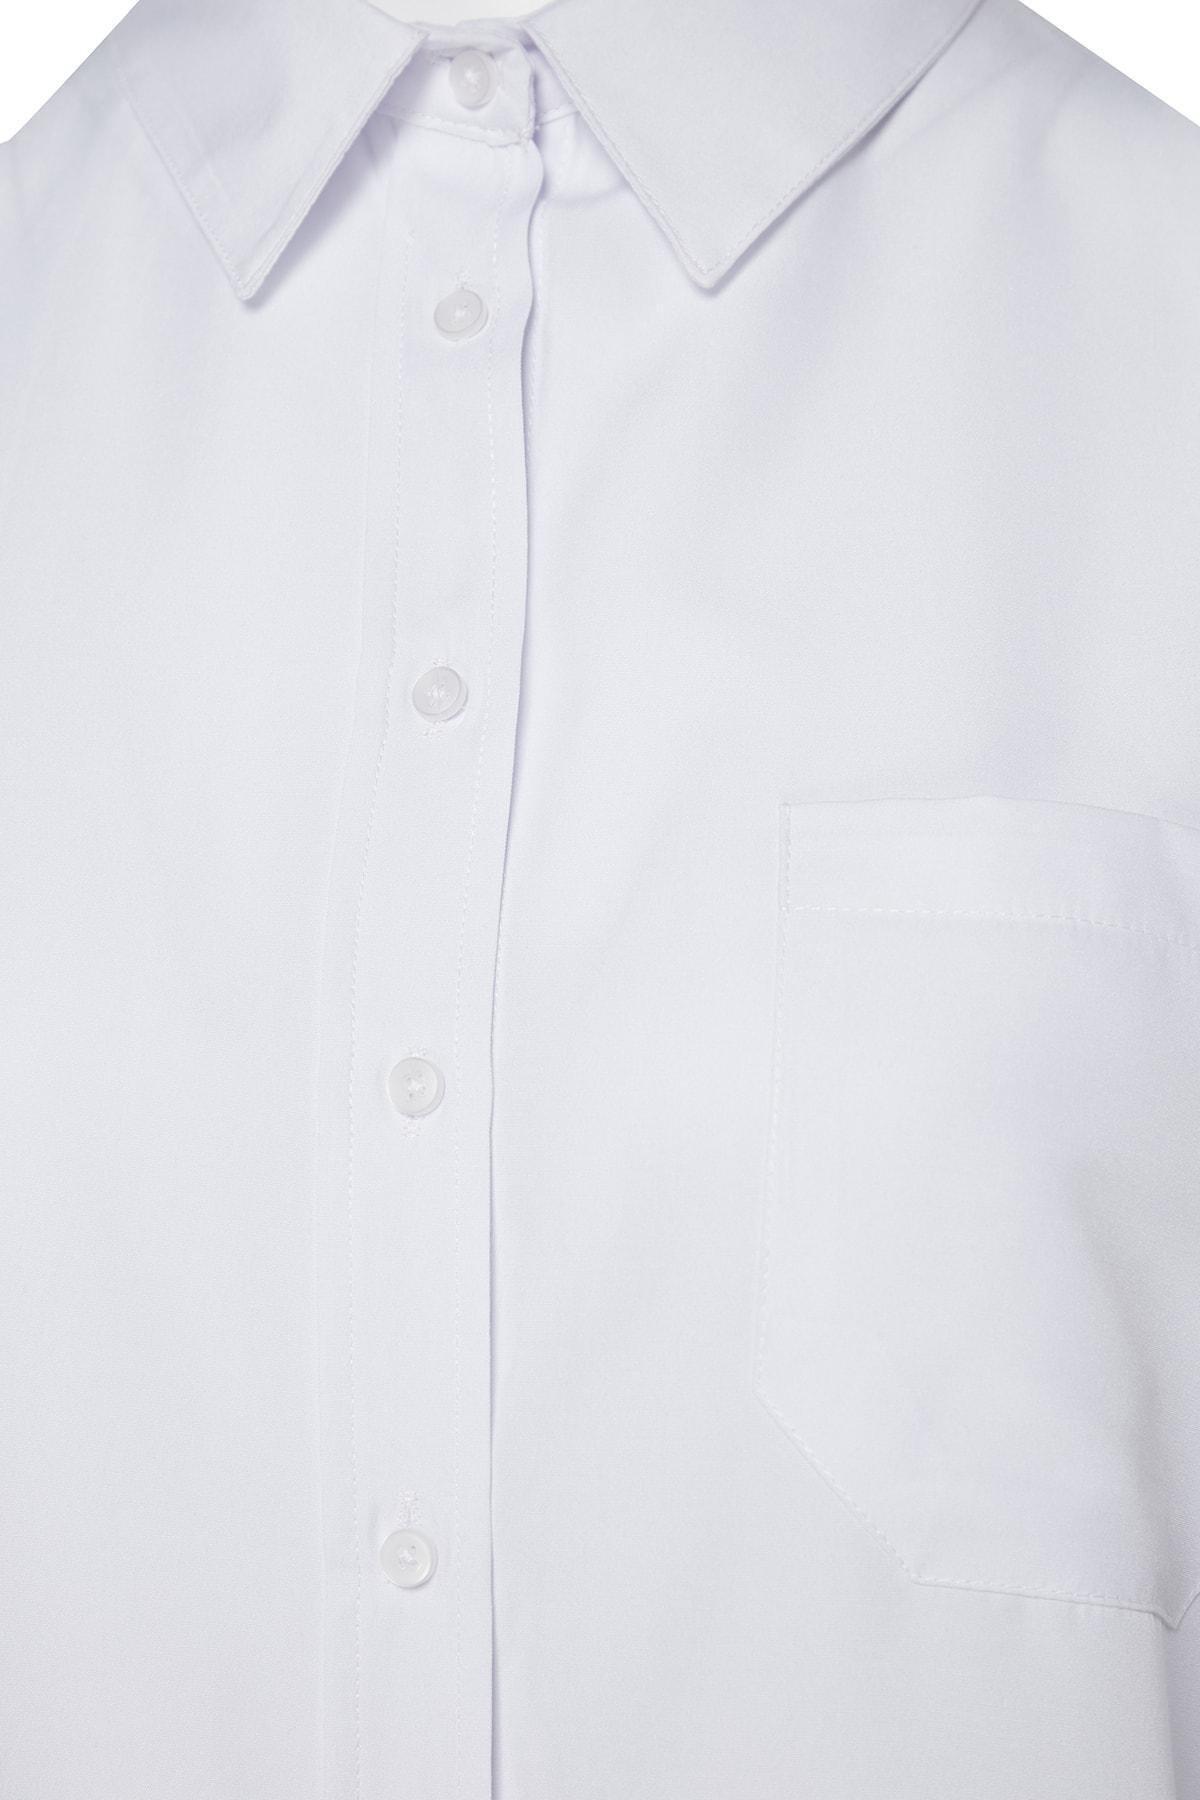 Trendyol - White Plus Size Collared Shirt